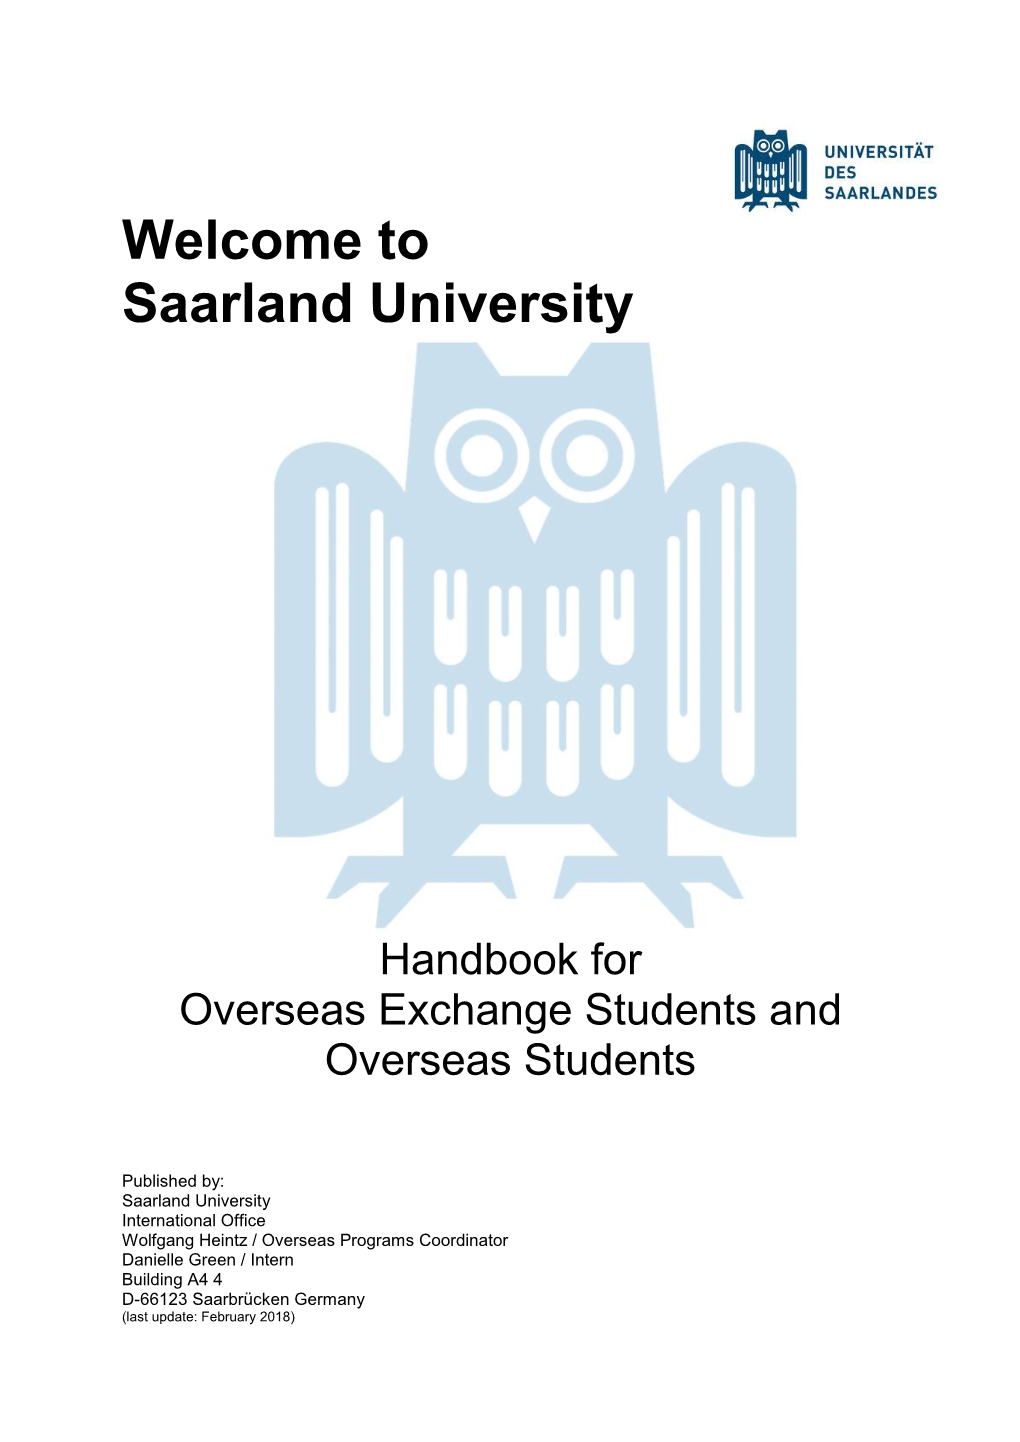 Welcome to Saarland University